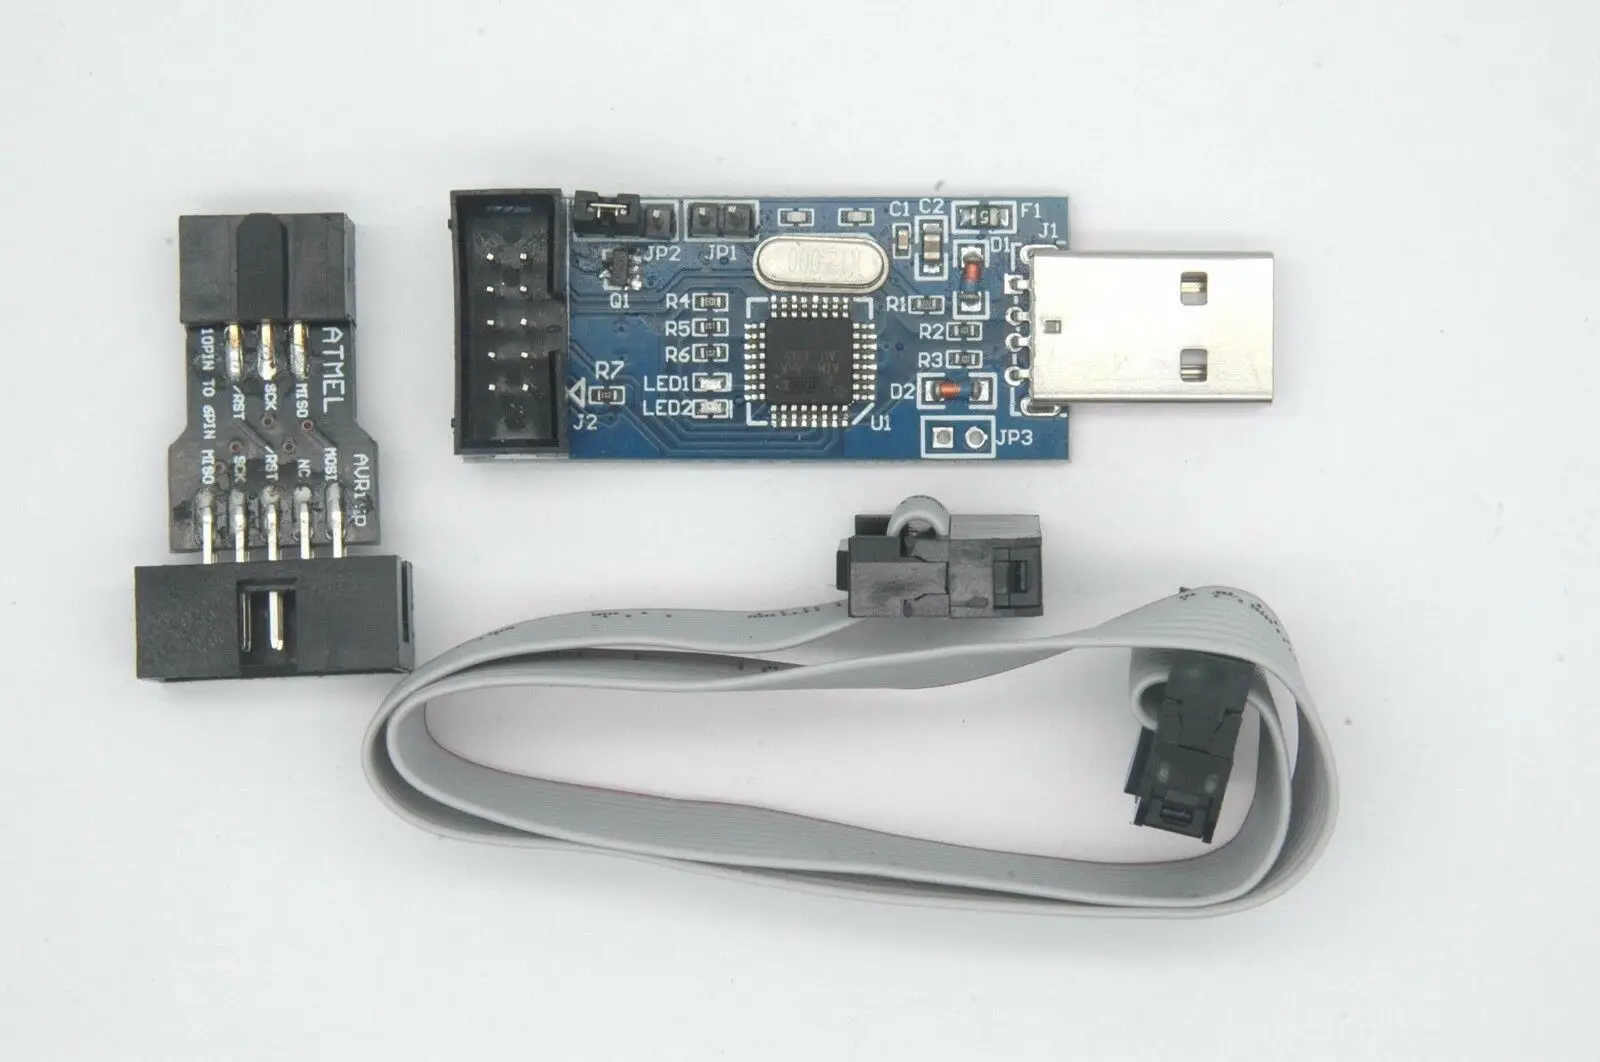 USBASP USB ISP Programmer for Atmel ATMega328, ATMega32U4, 3.3V, 5Vk -  AliExpress